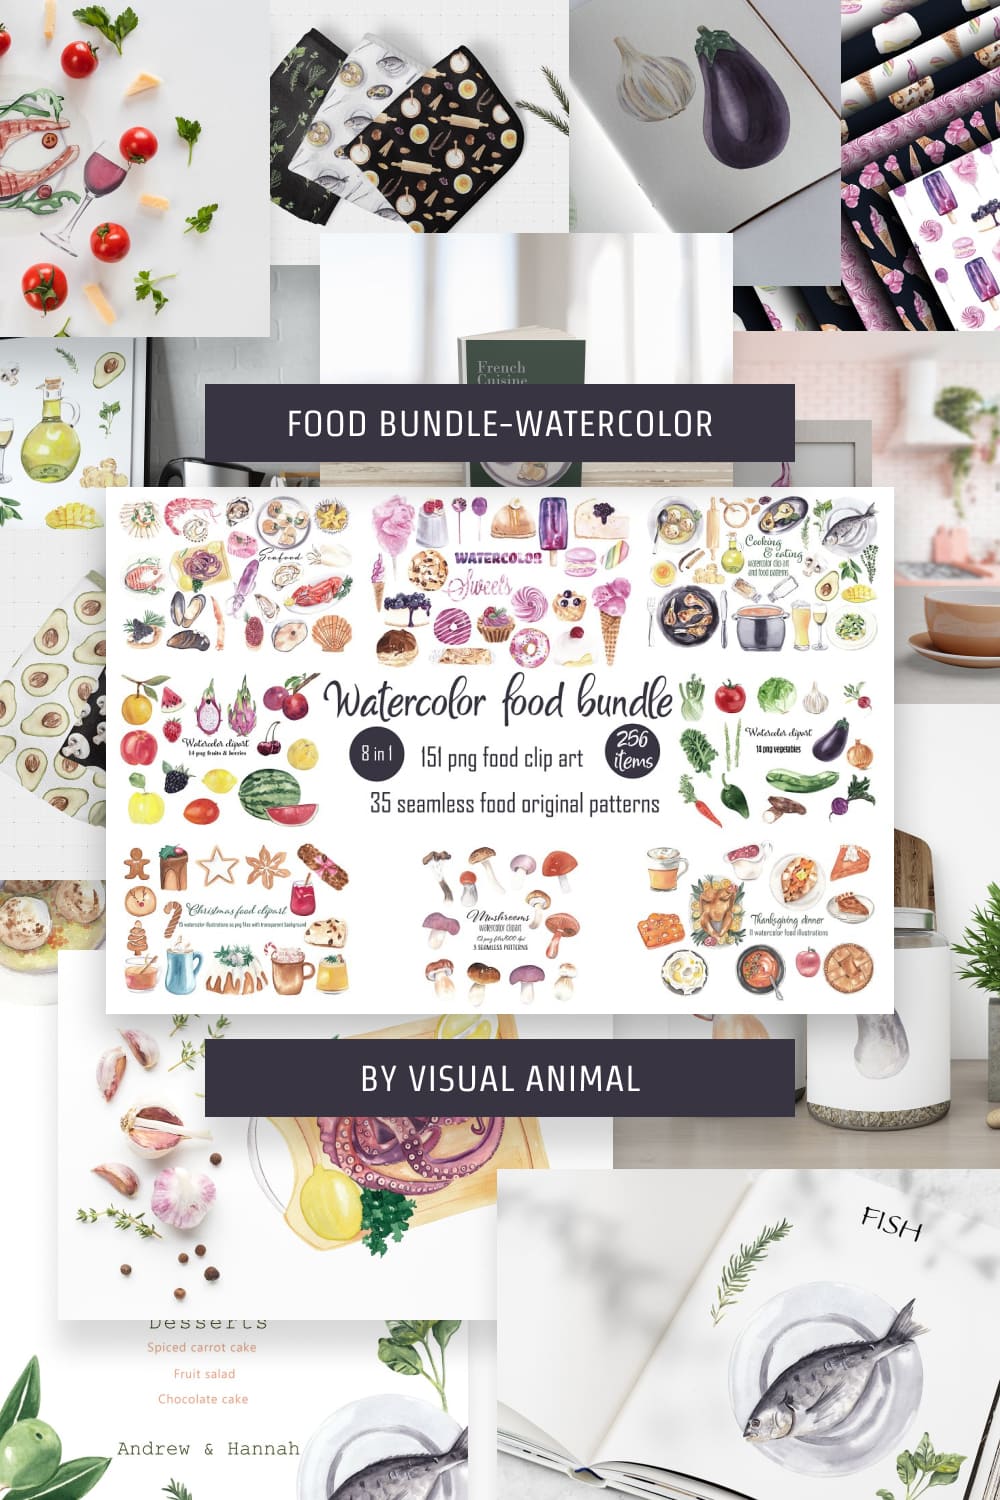 Food bundle watercolor Pinterest.